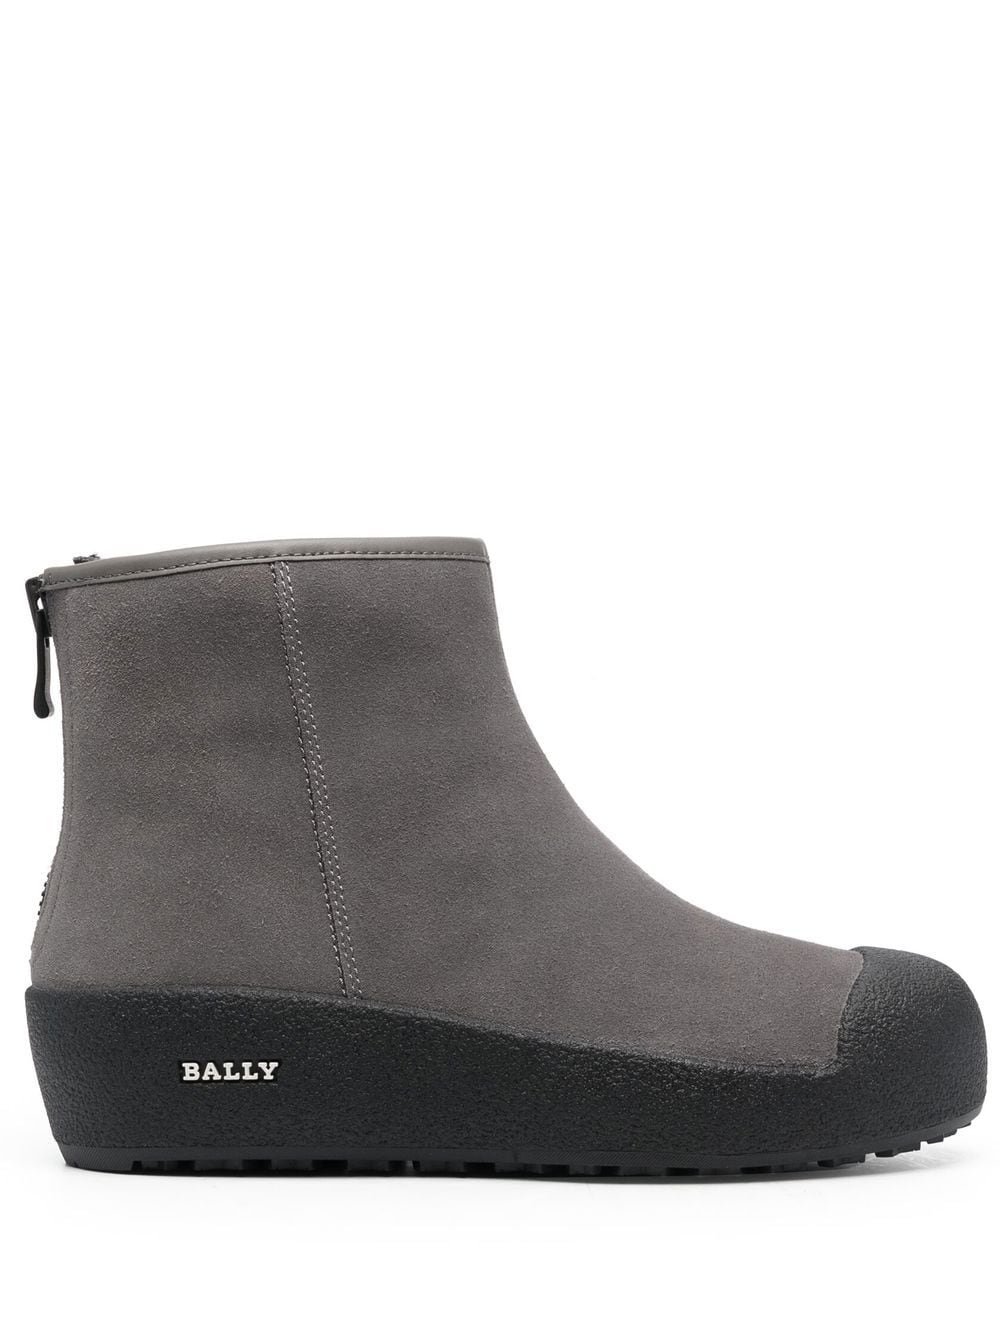 Bally Guard ankle boots - Grey von Bally